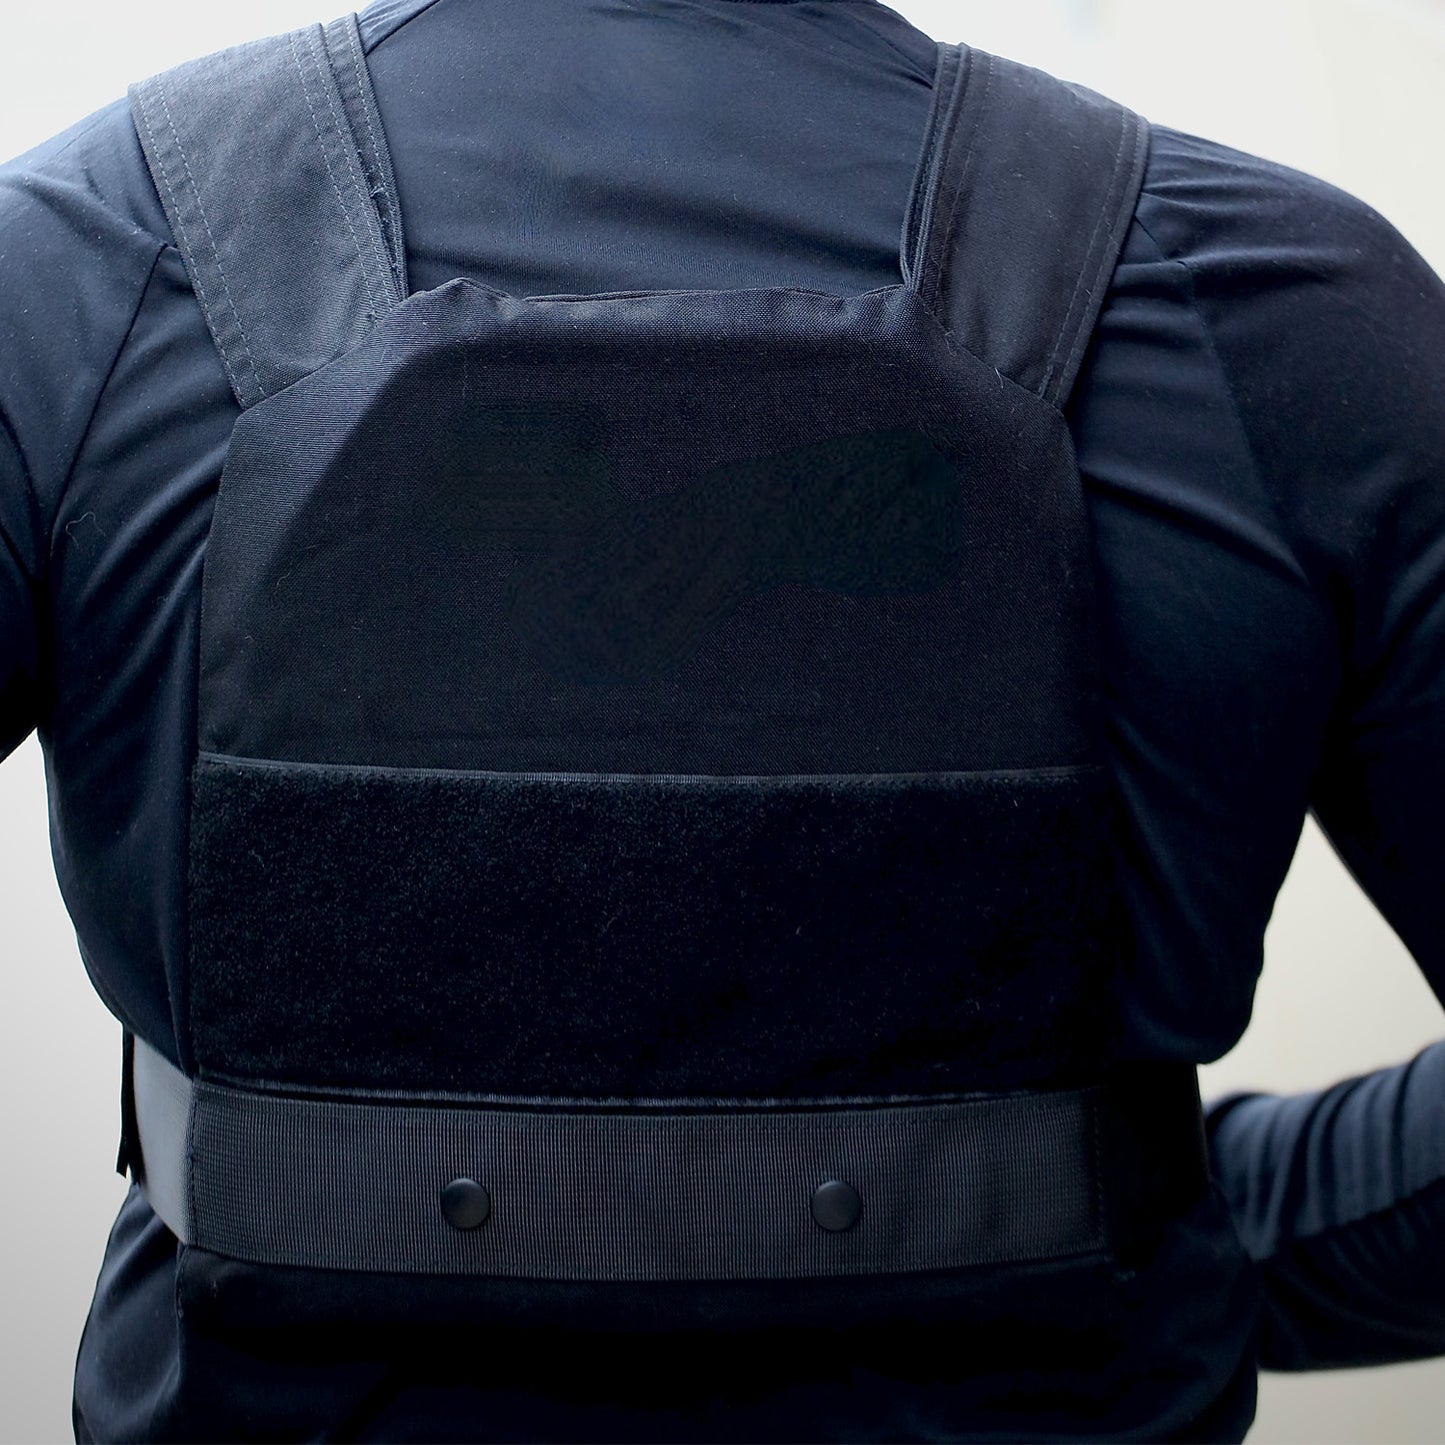 Street Armor - Bulletproof Vest